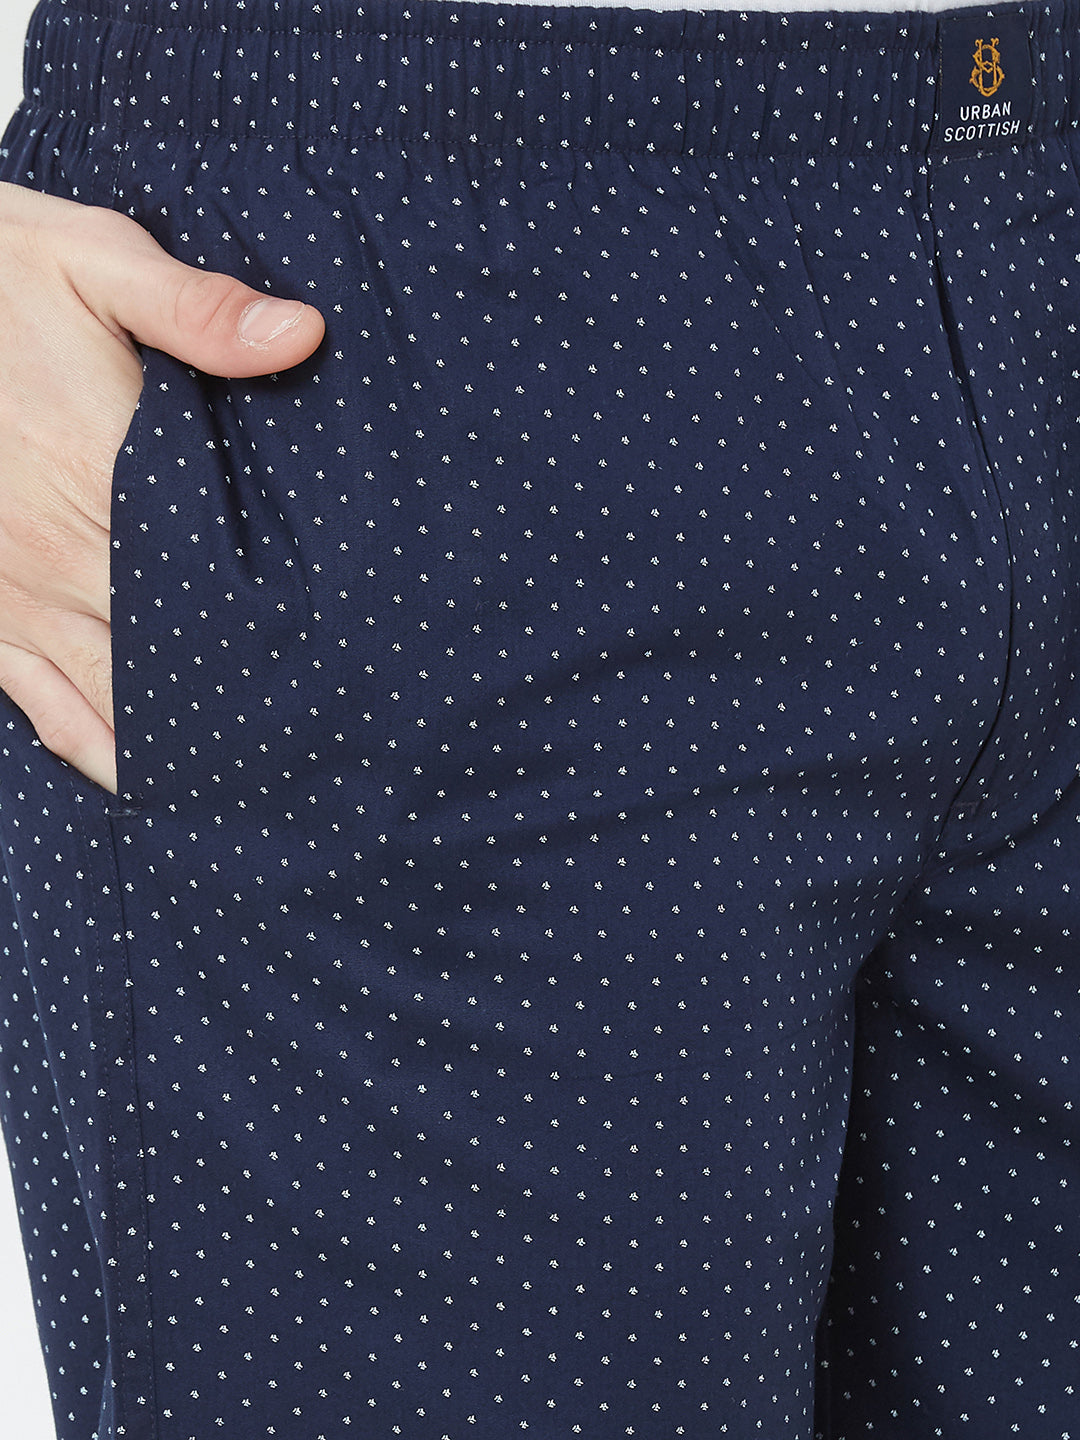 Men's Polka Print, Navy, 100% Cotton, Regular Fit, Elasticated, Waistband, Pyjama  With Side Pockets